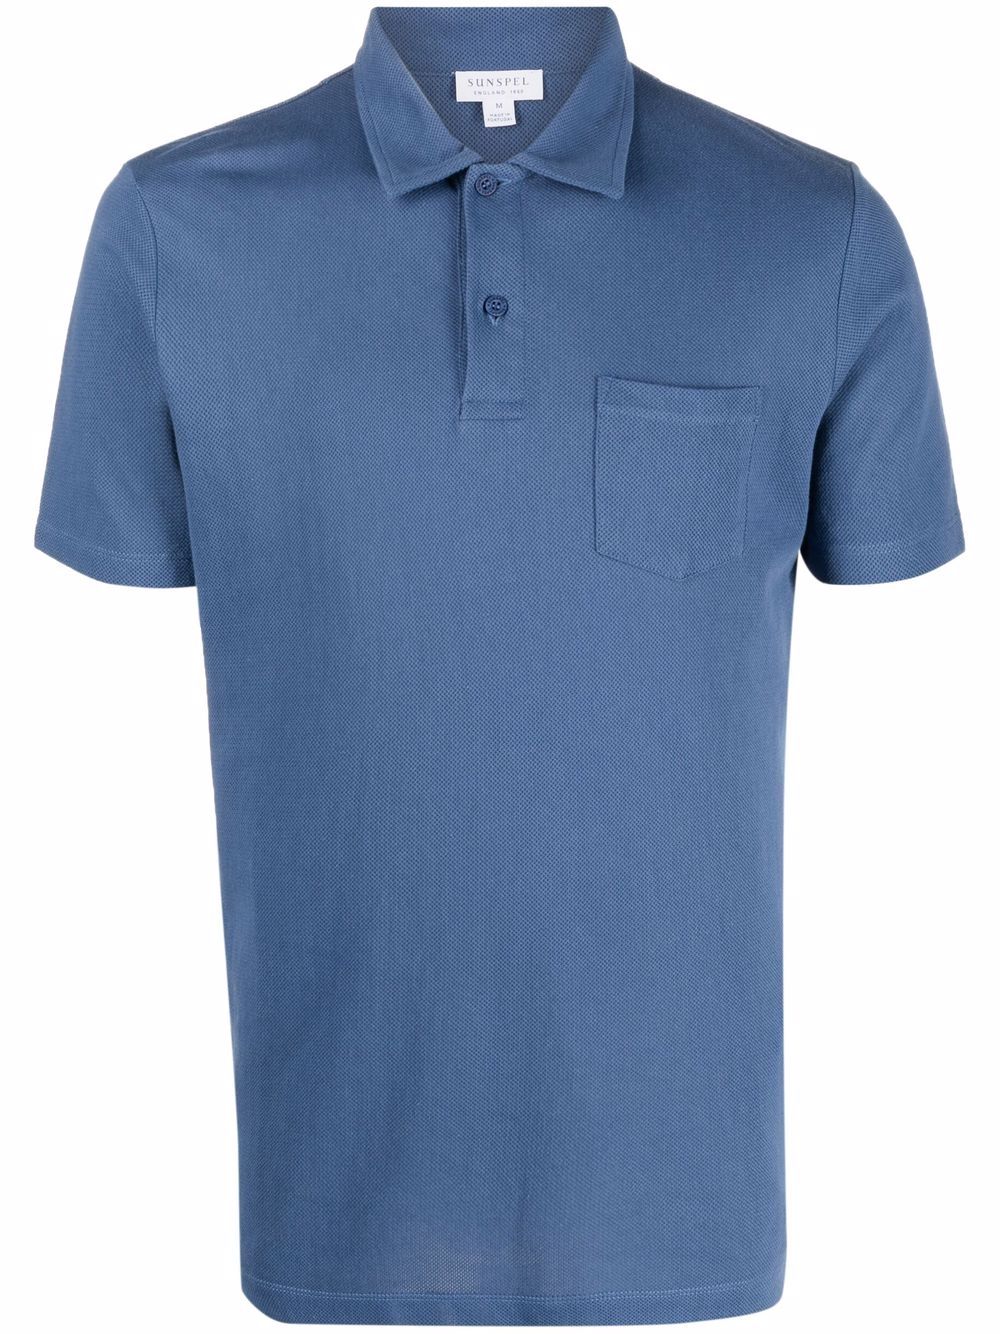 Sunspel pocket cotton polo shirt - Blue von Sunspel